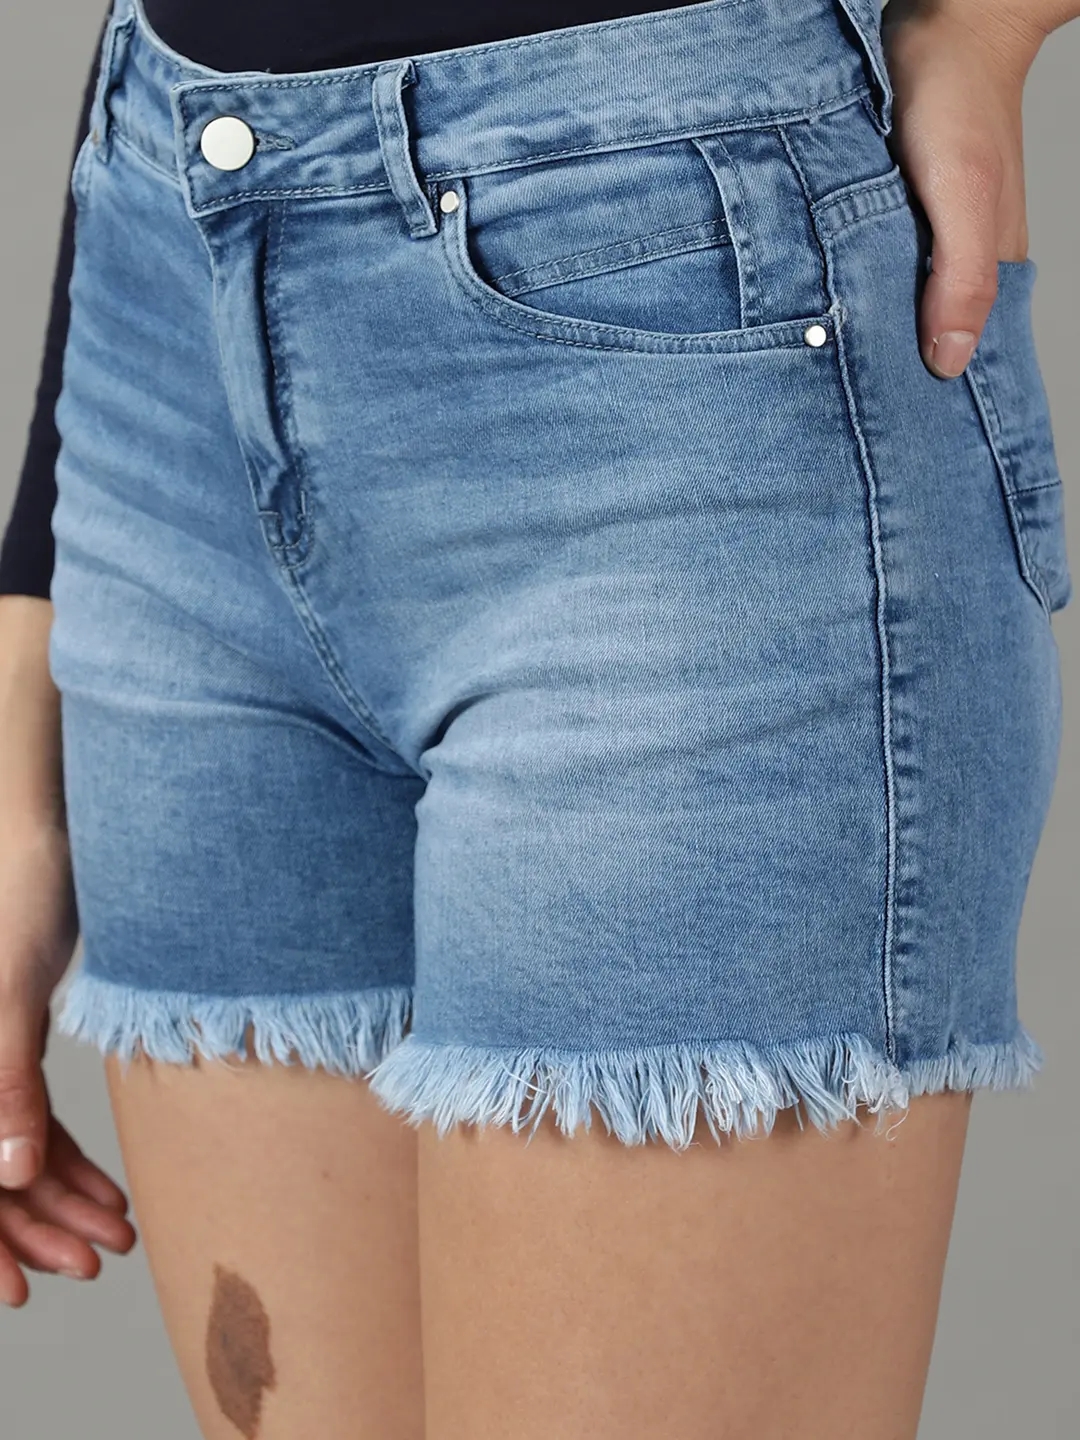 Buy BLUE Shorts for Women by Deal Jeans Online  Ajiocom